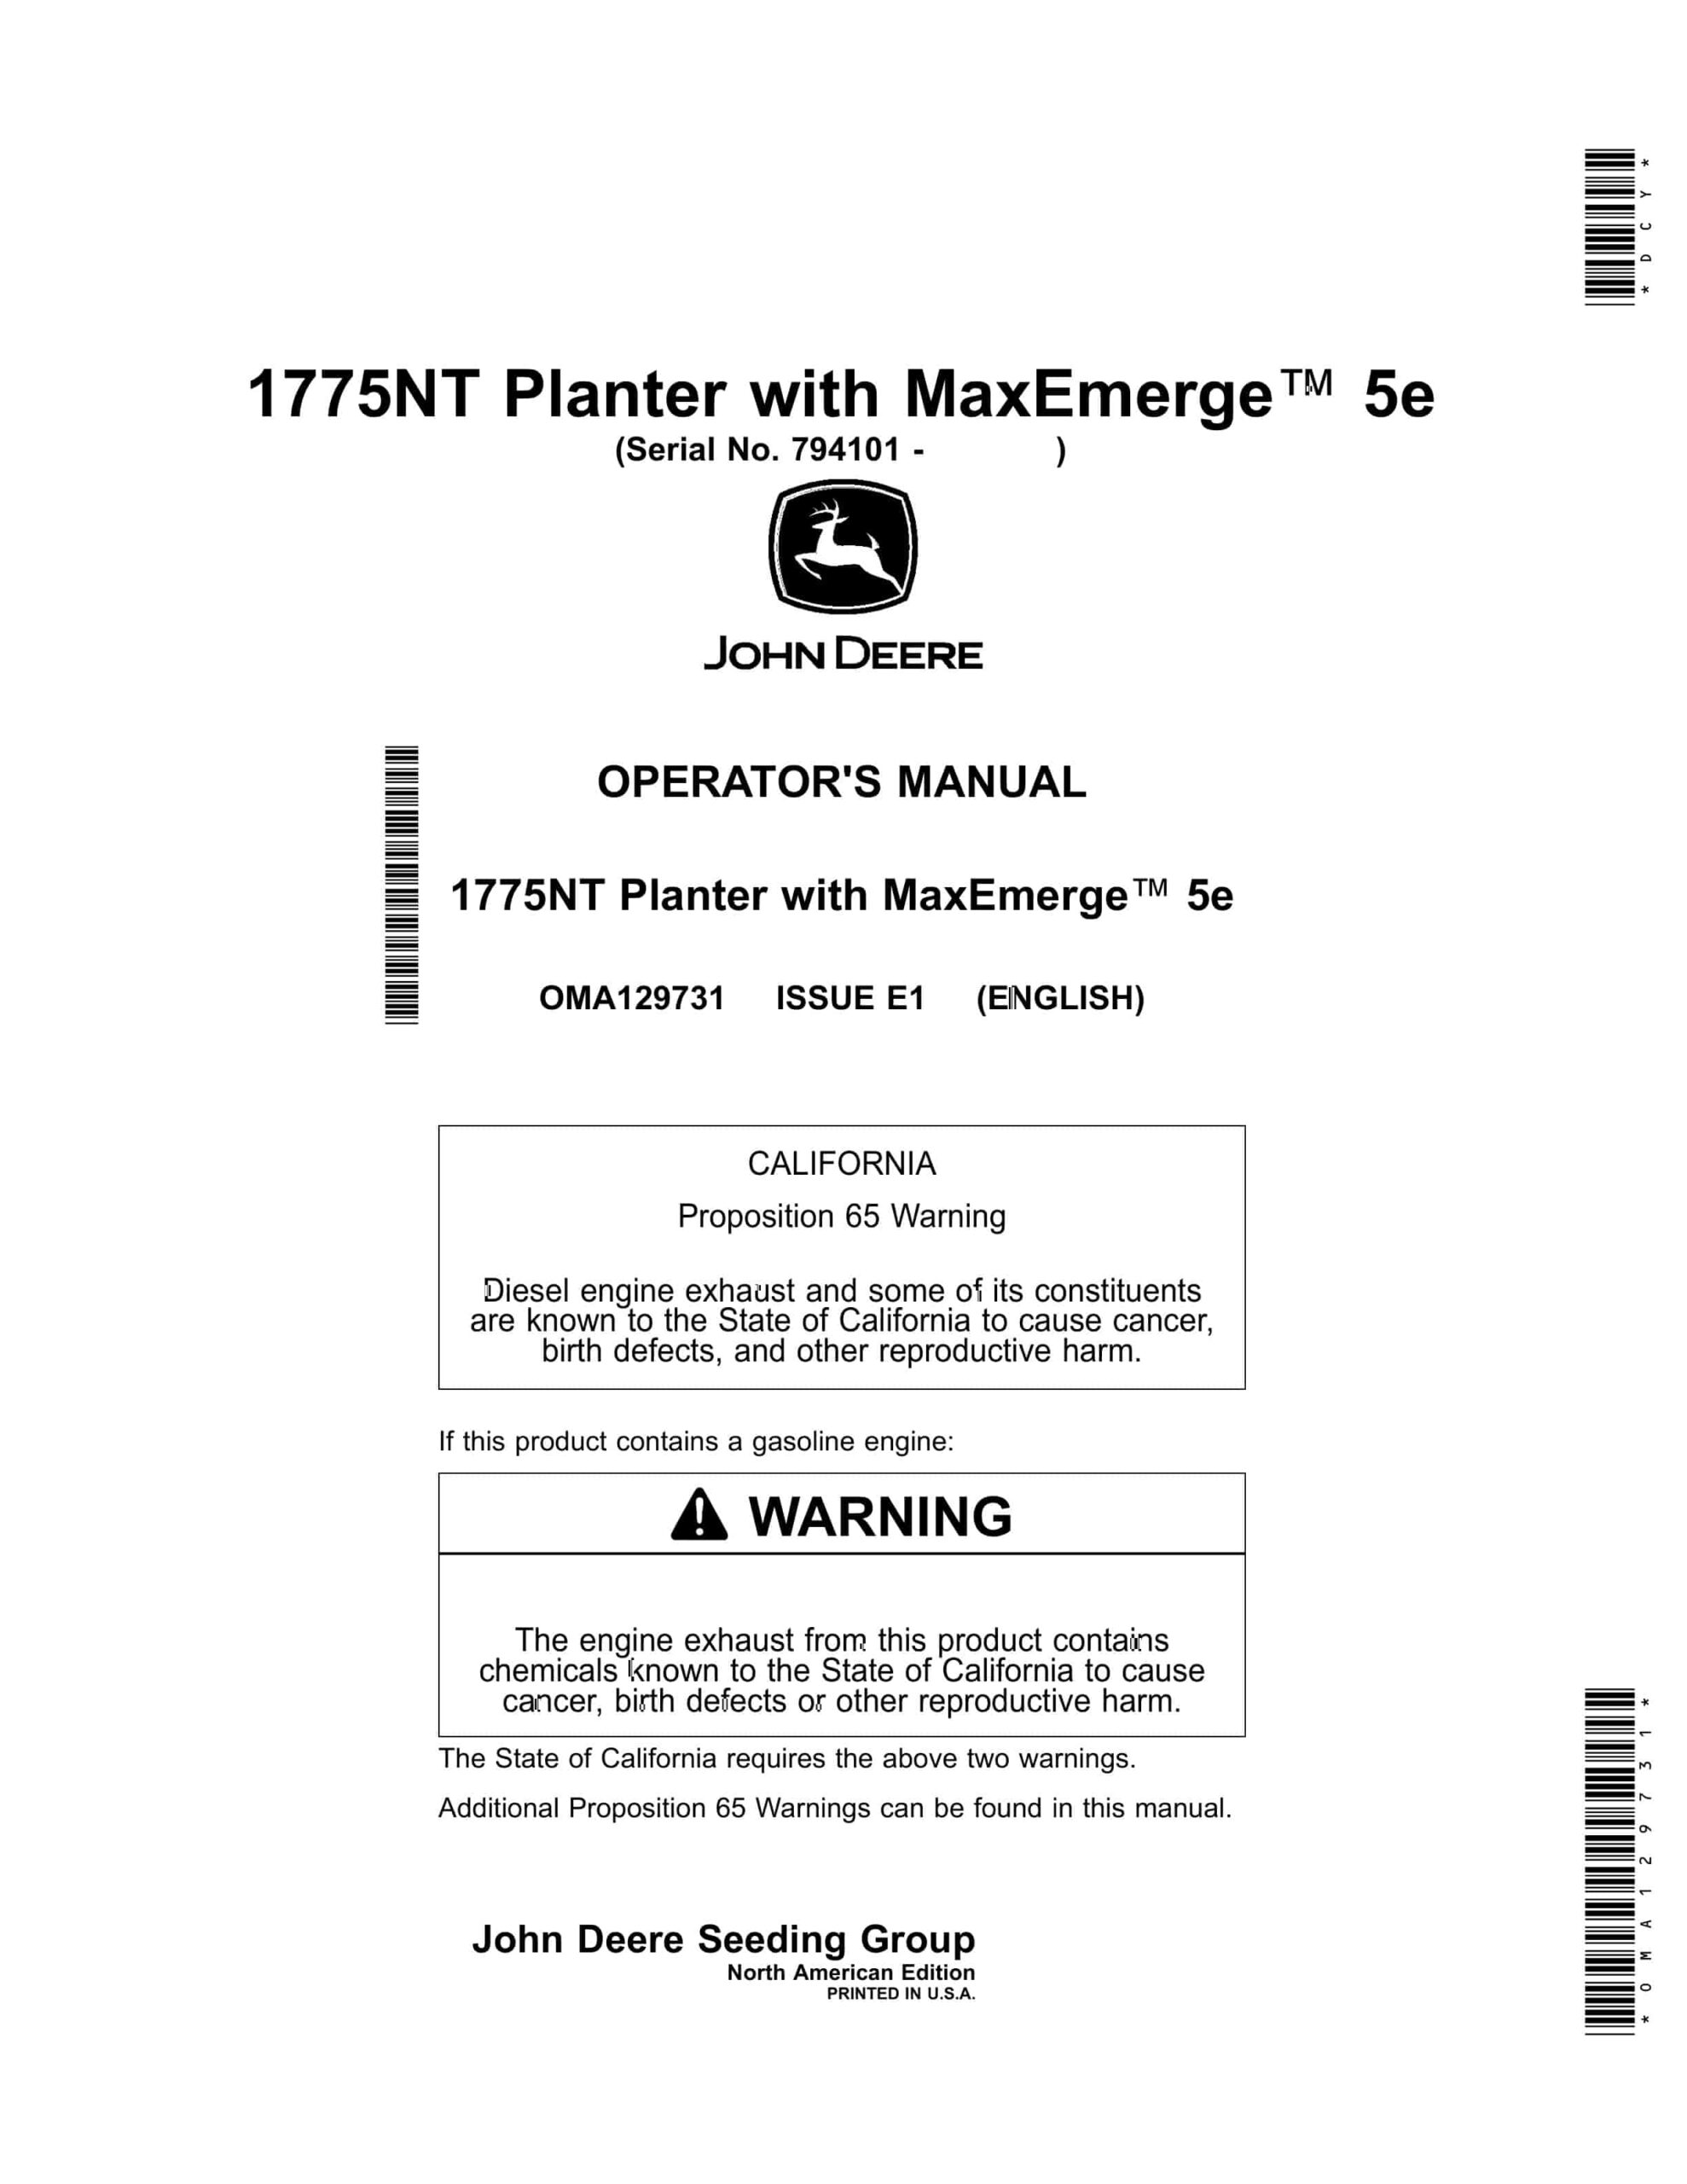 John Deere 1775NT Planter with MaxEmerge 5e Operator Manual OMA129731-1